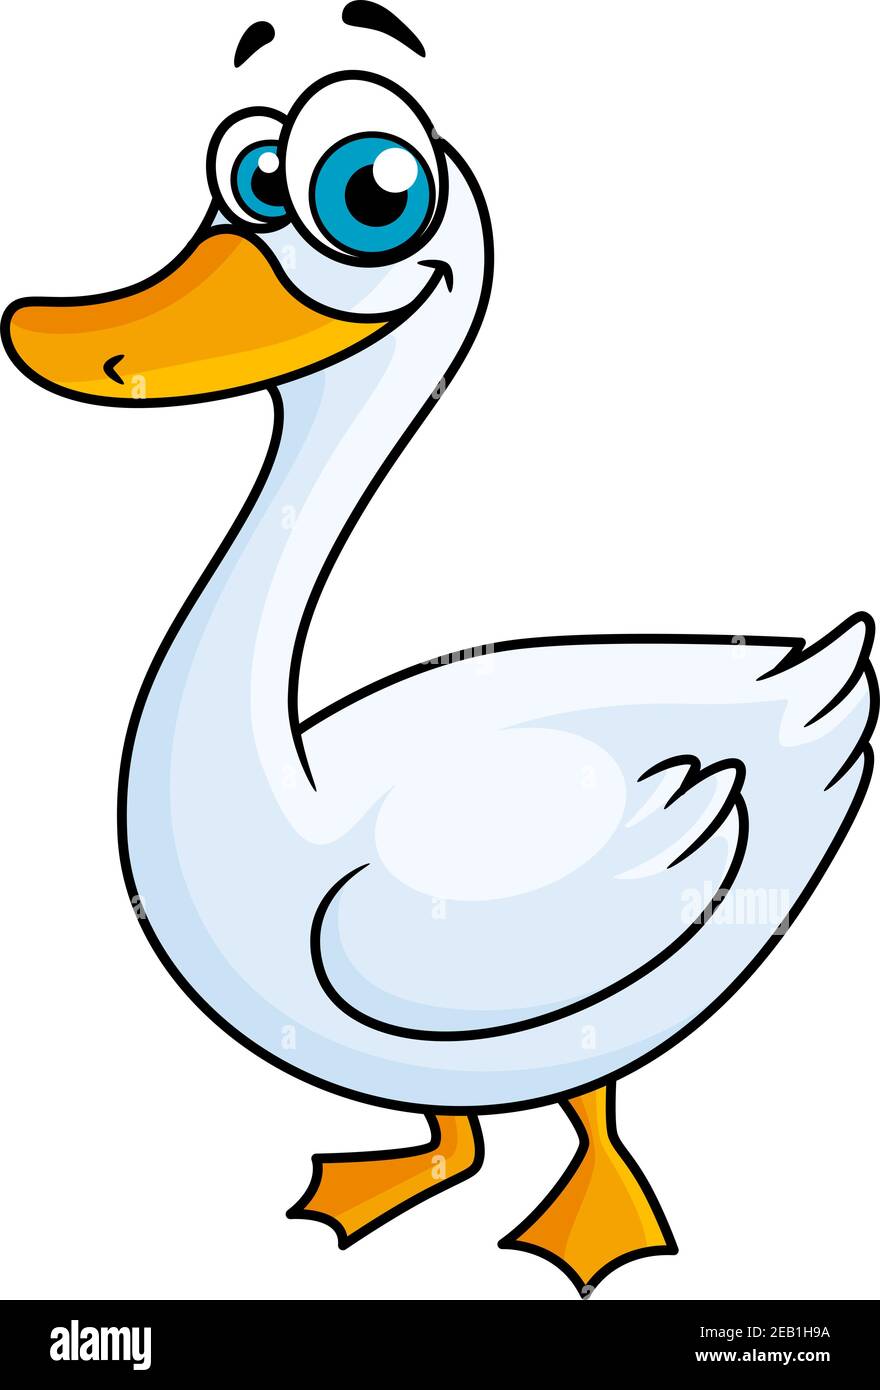 Gosling goose bird Stock Vector Images - Alamy